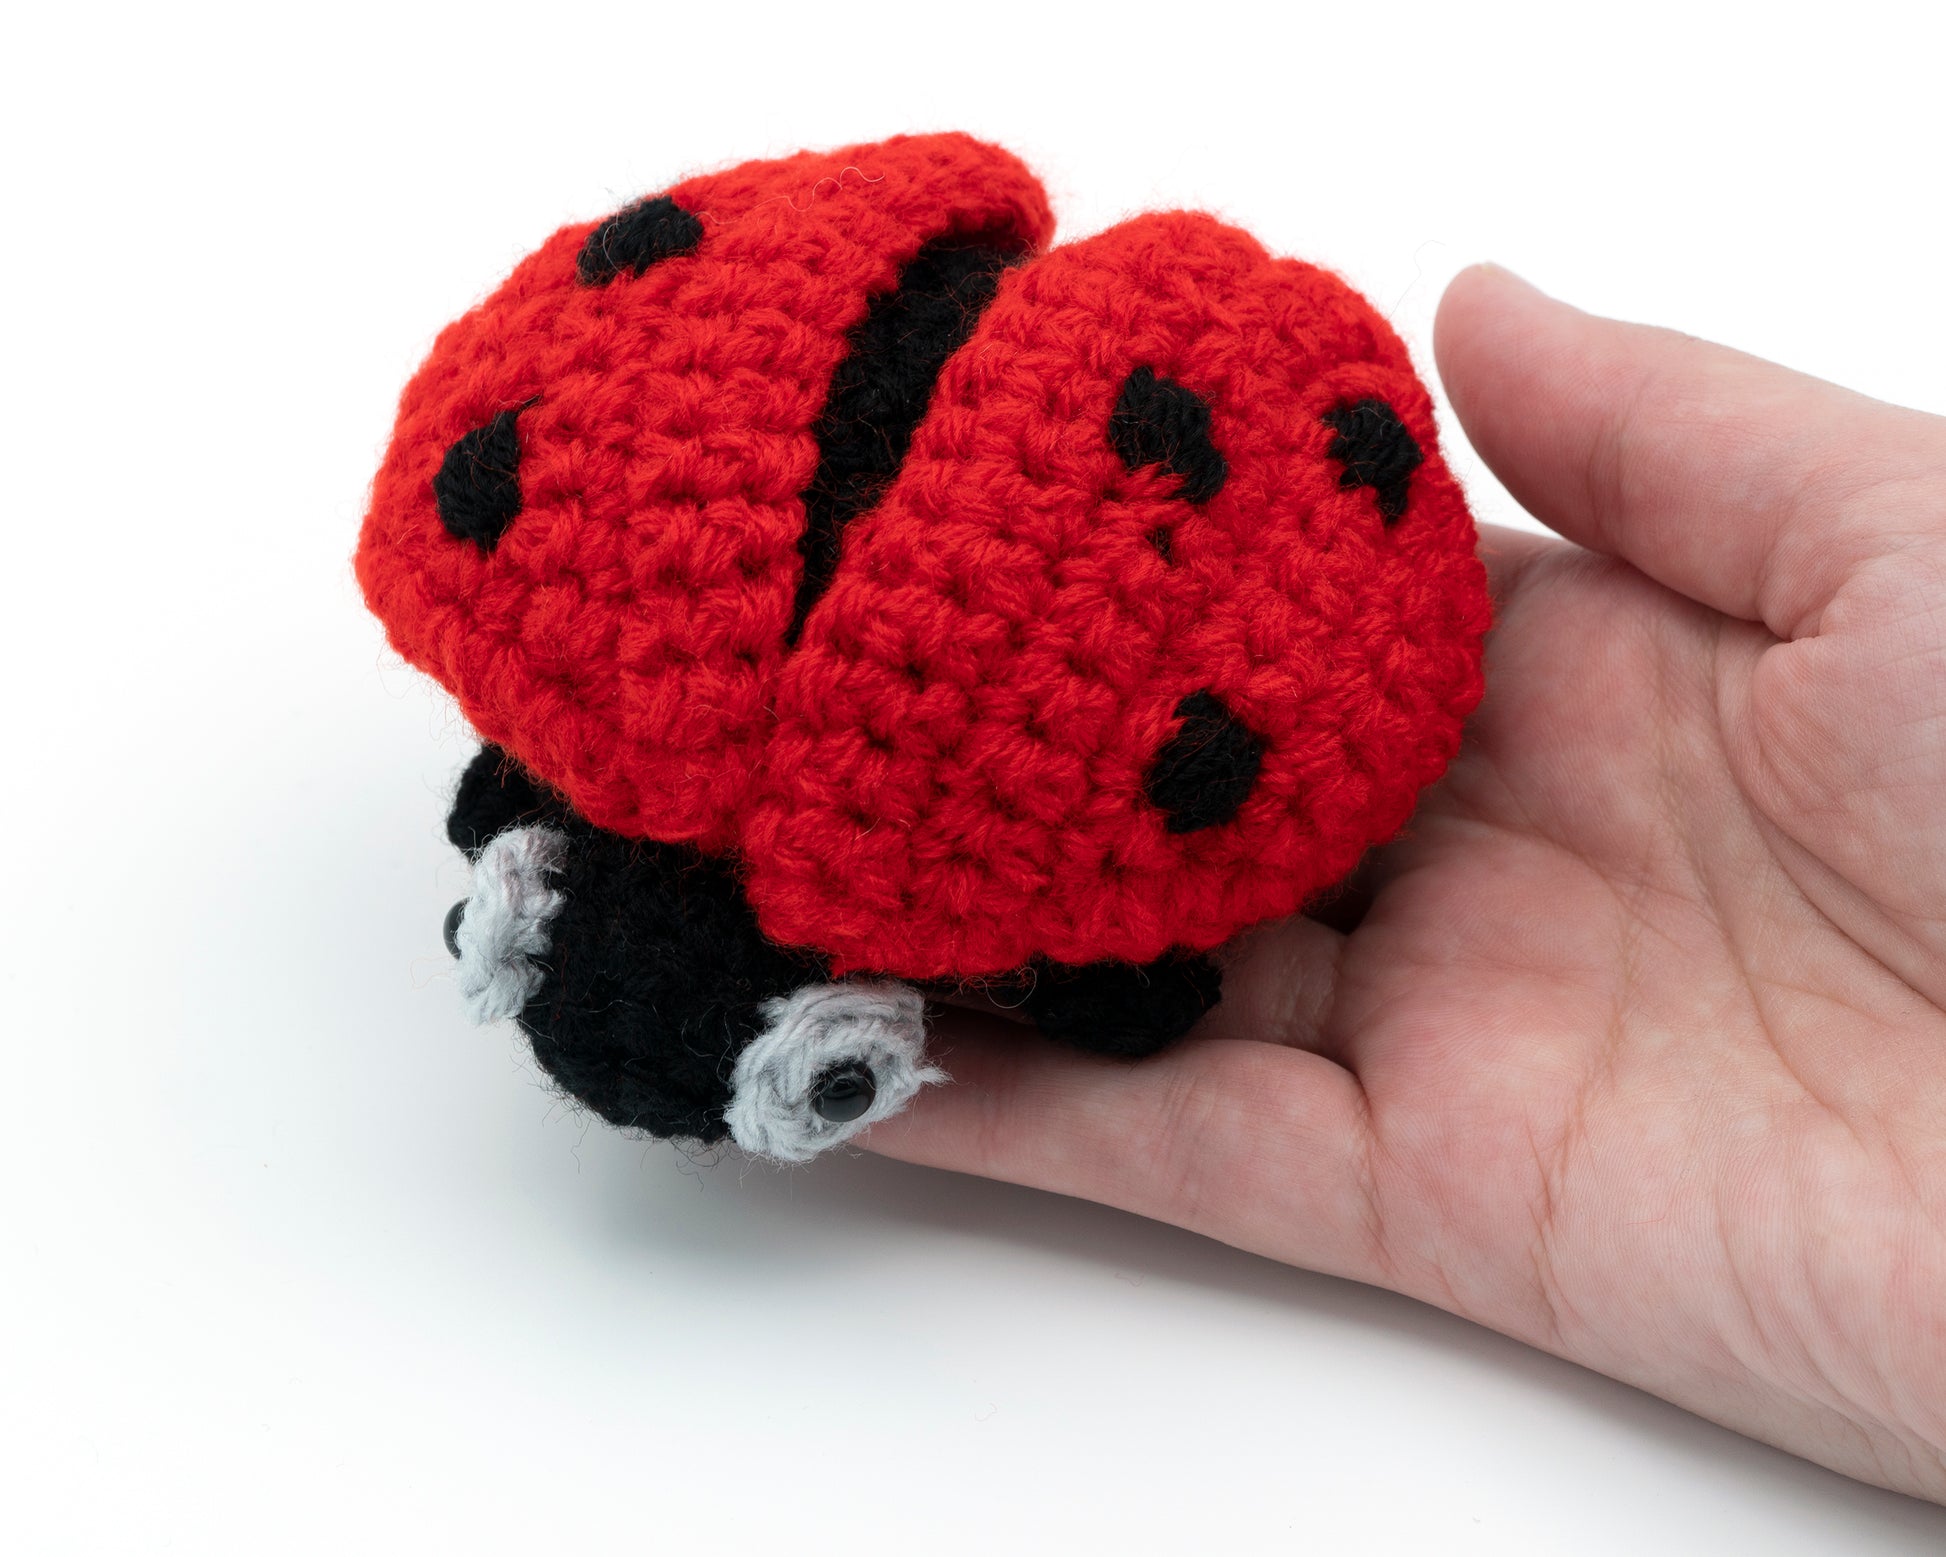 amigurumi crochet ladybug pattern in hand for size comparison